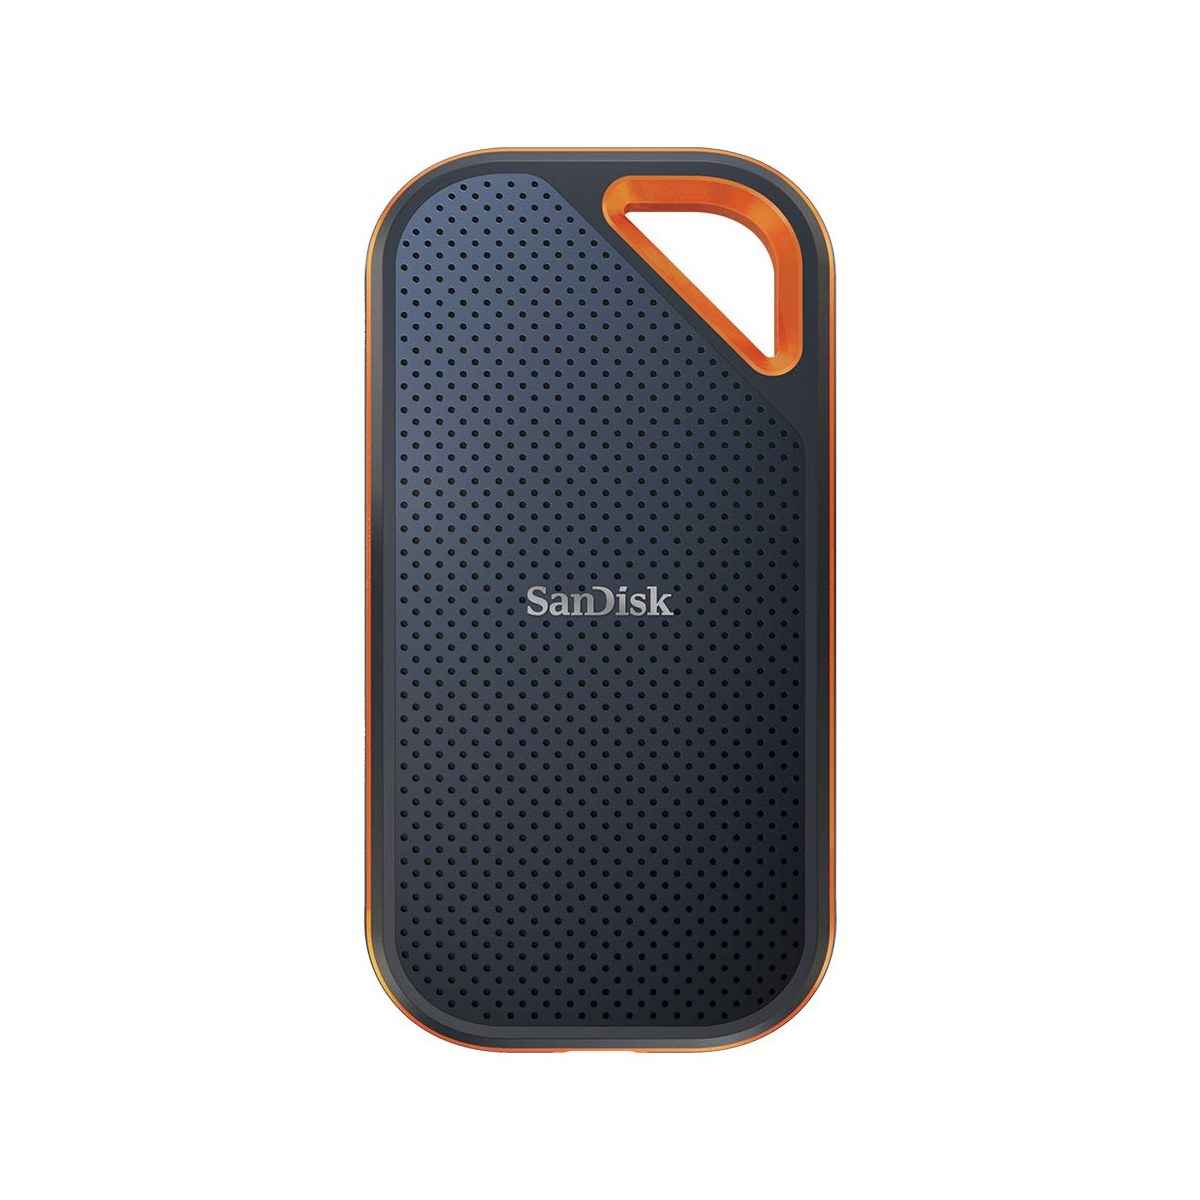 SanDisk 1TB Extreme Pro Portable External SSD 